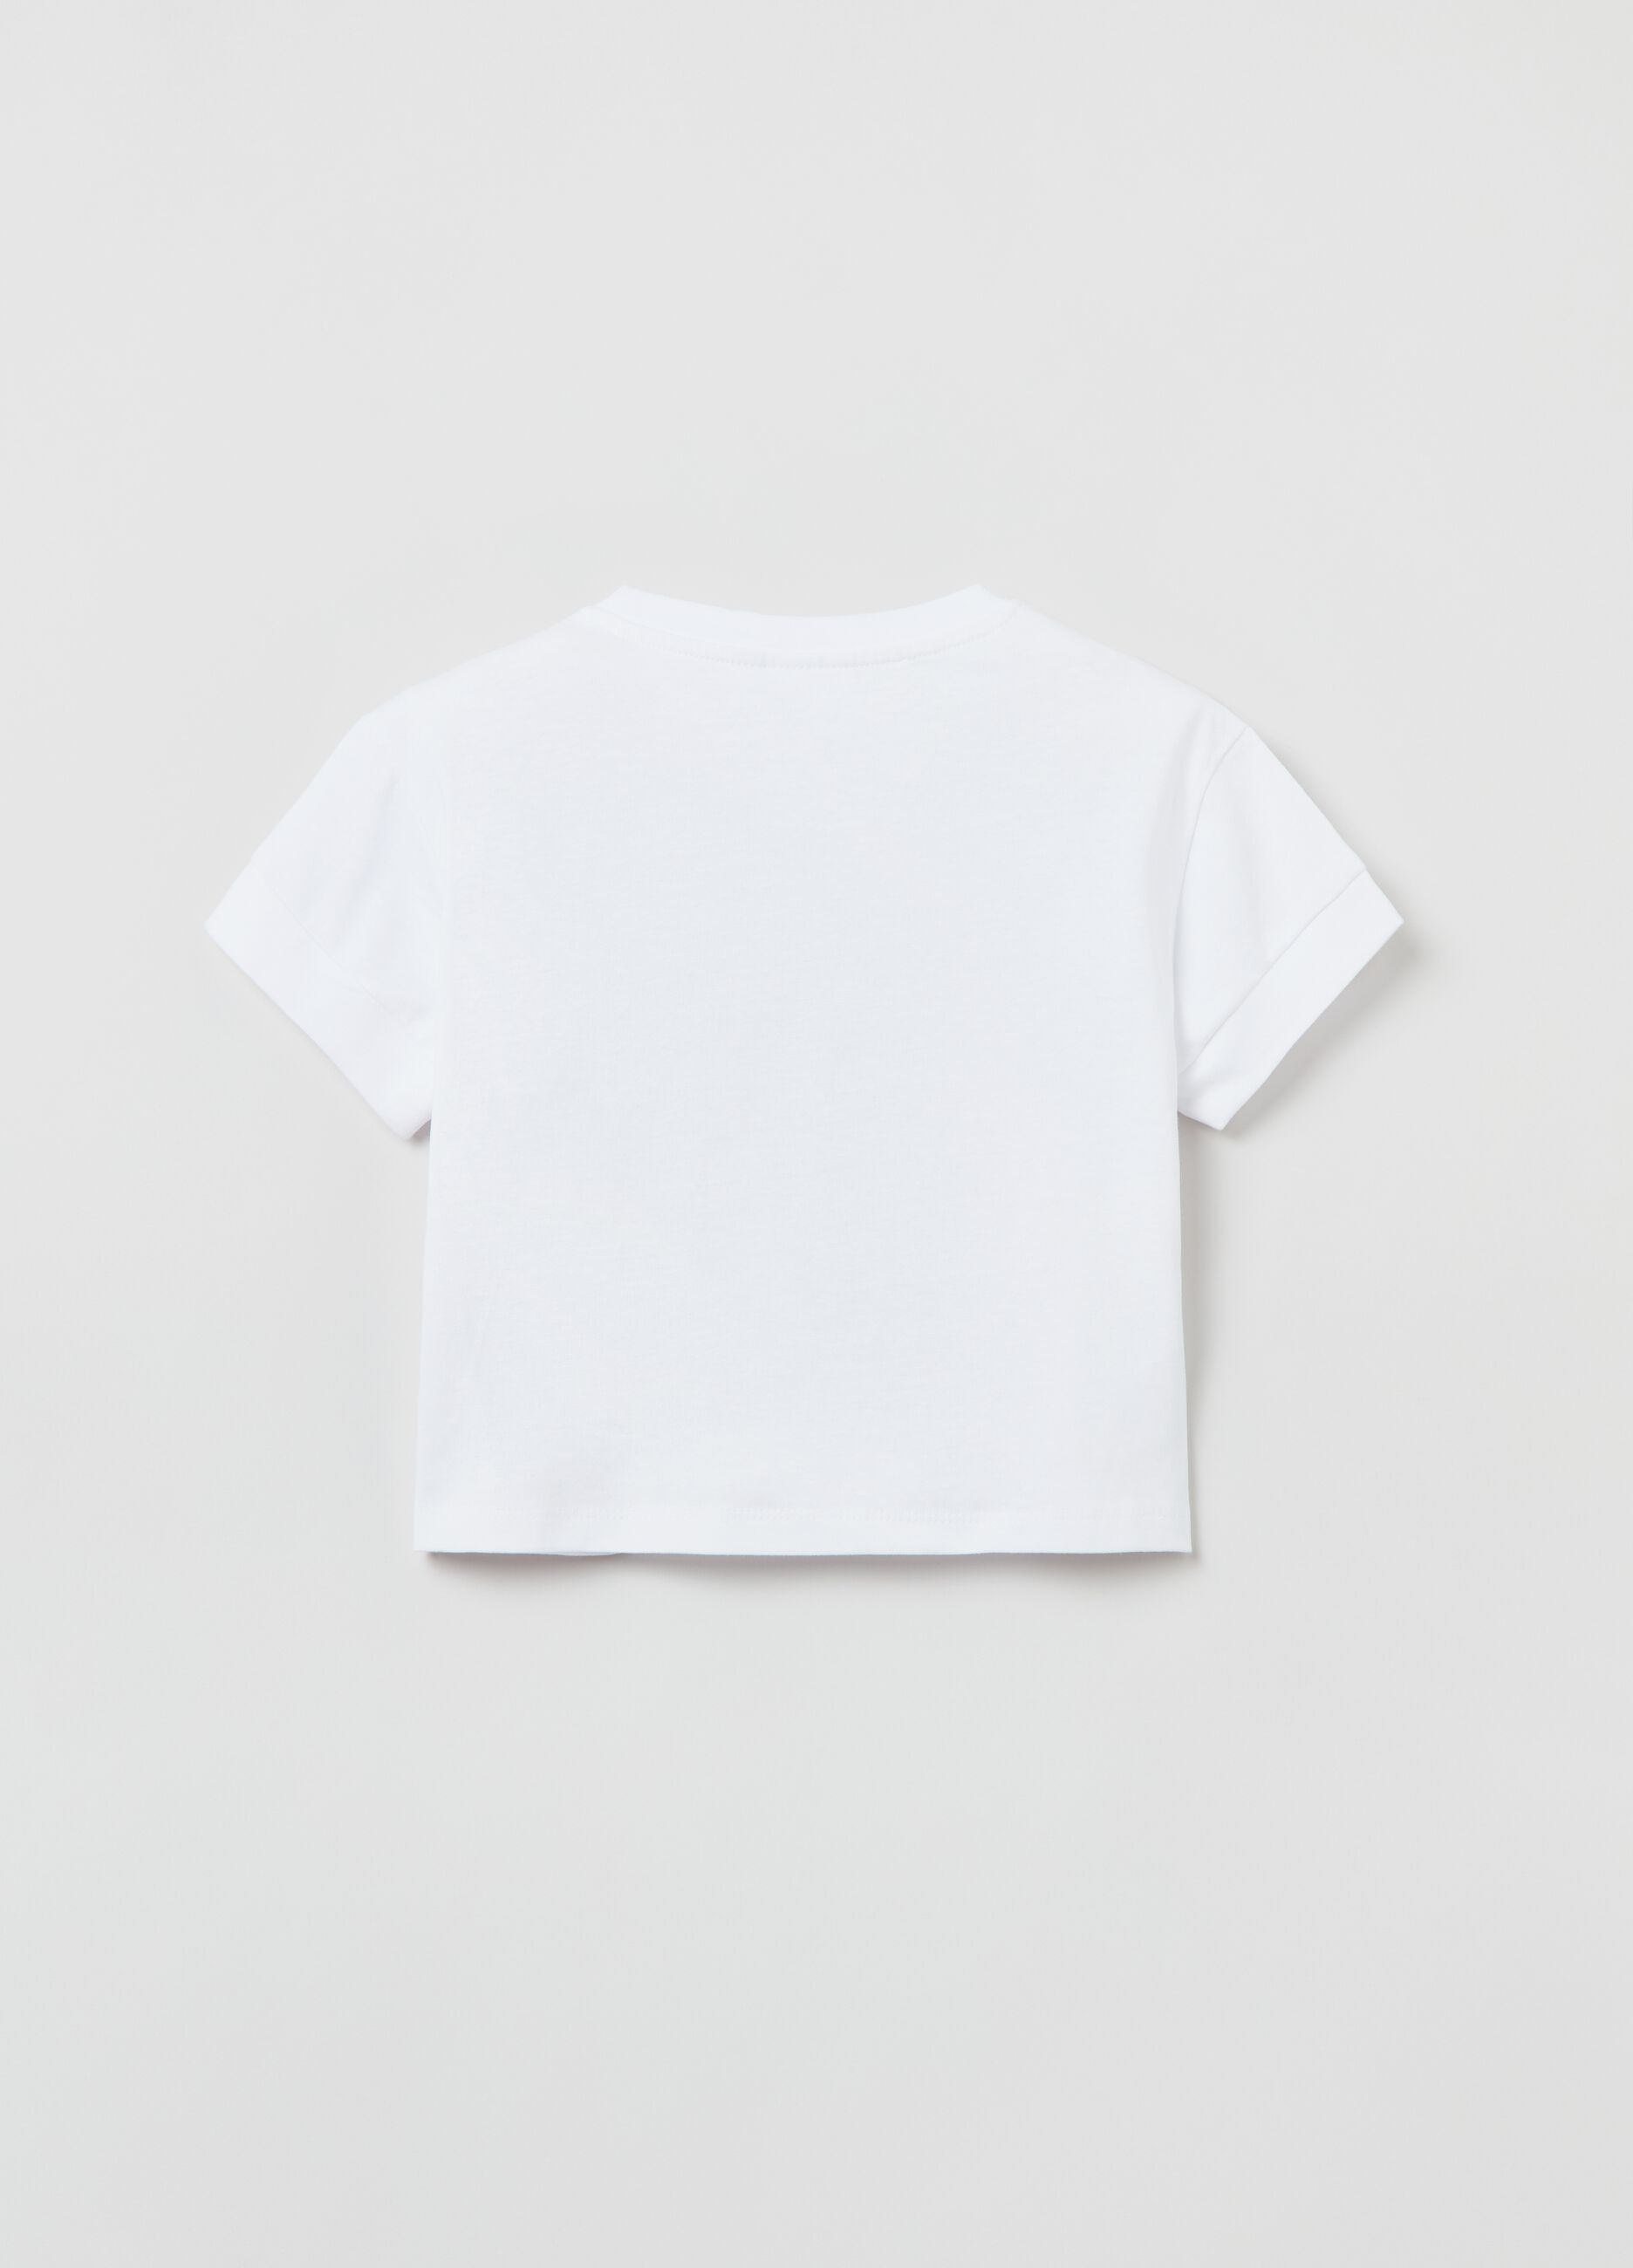 Cotton T-shirt with Sailor Moon print